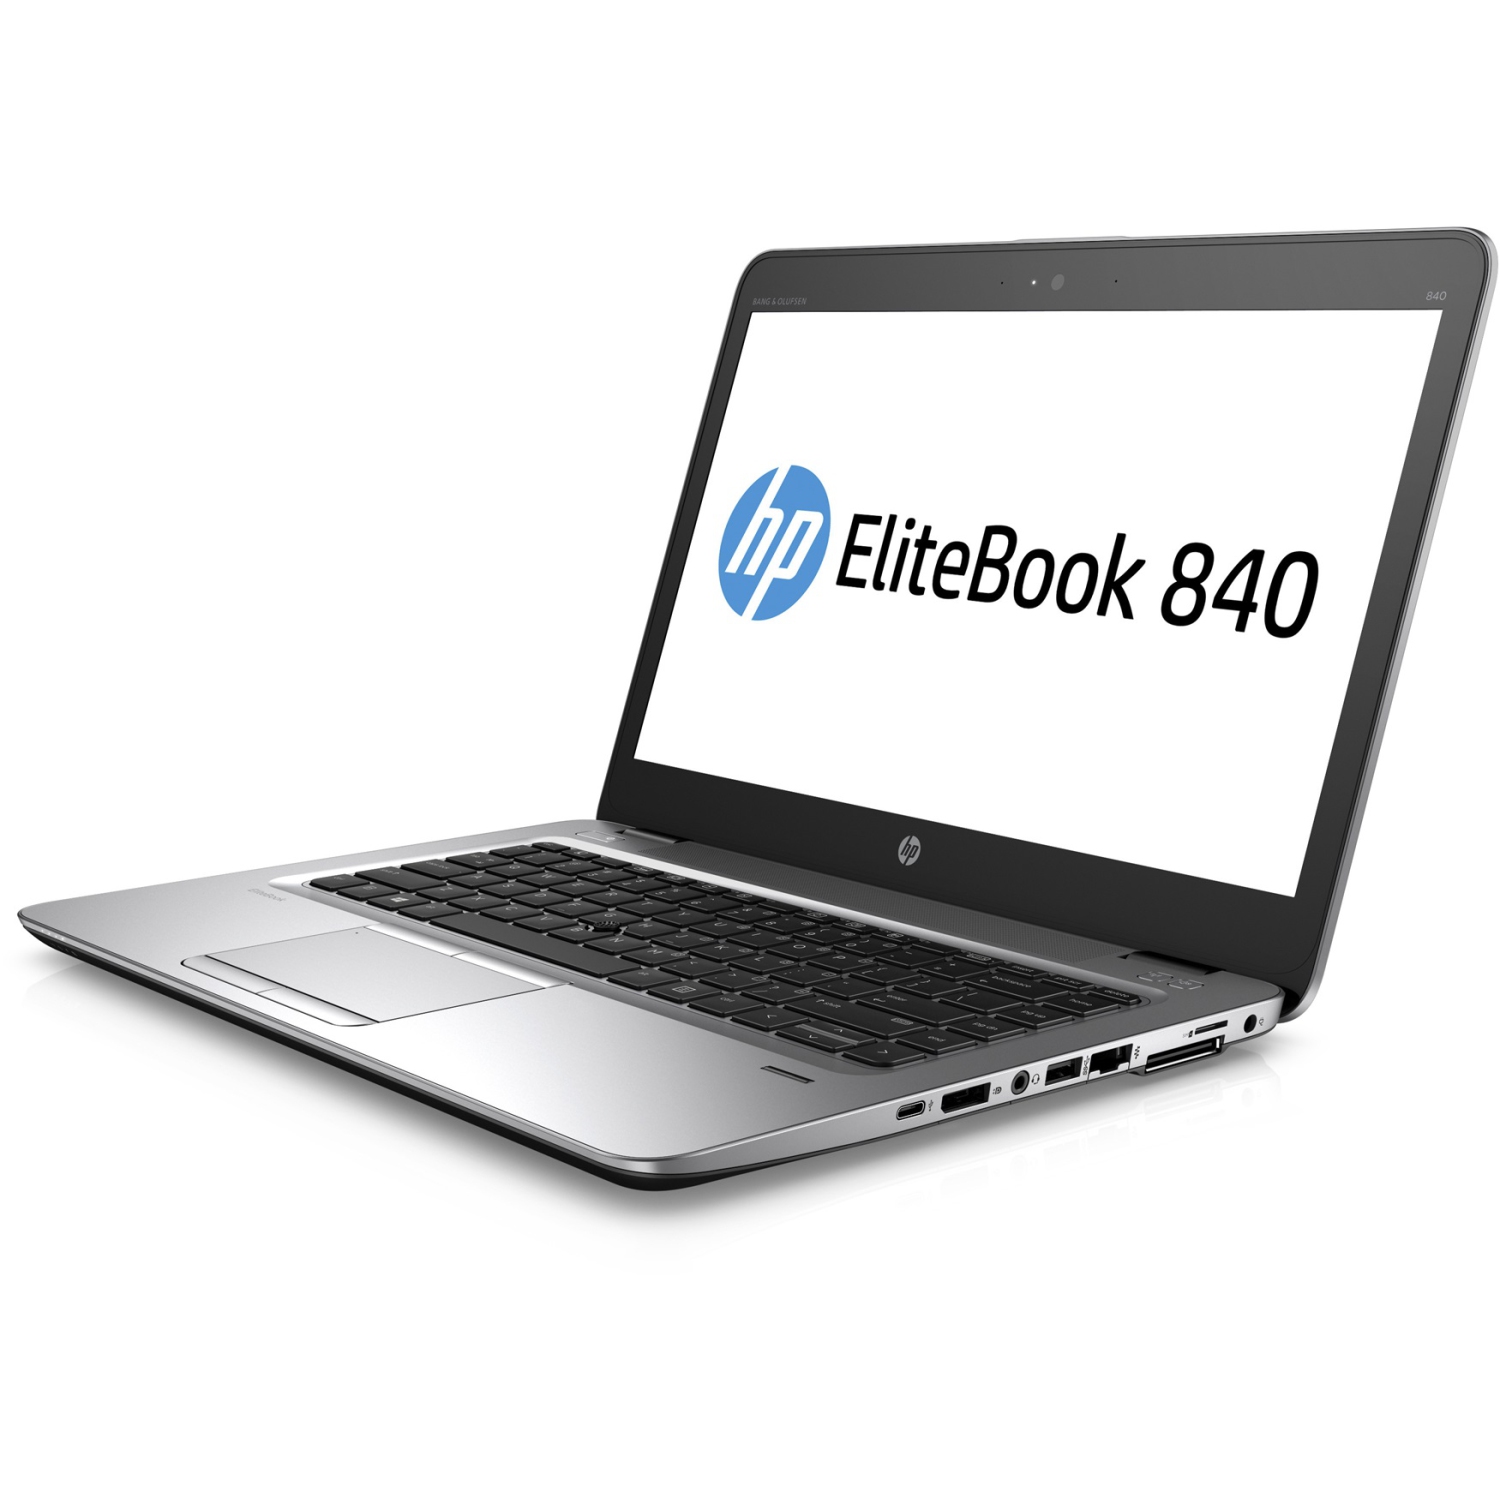 HP EliteBook 840 G3 14" FHD Laptop - Intel Core i5-6200U - 16GB RAM - 256GB SSD - Windows 10 Pro - REFURBISHED (Grade A)